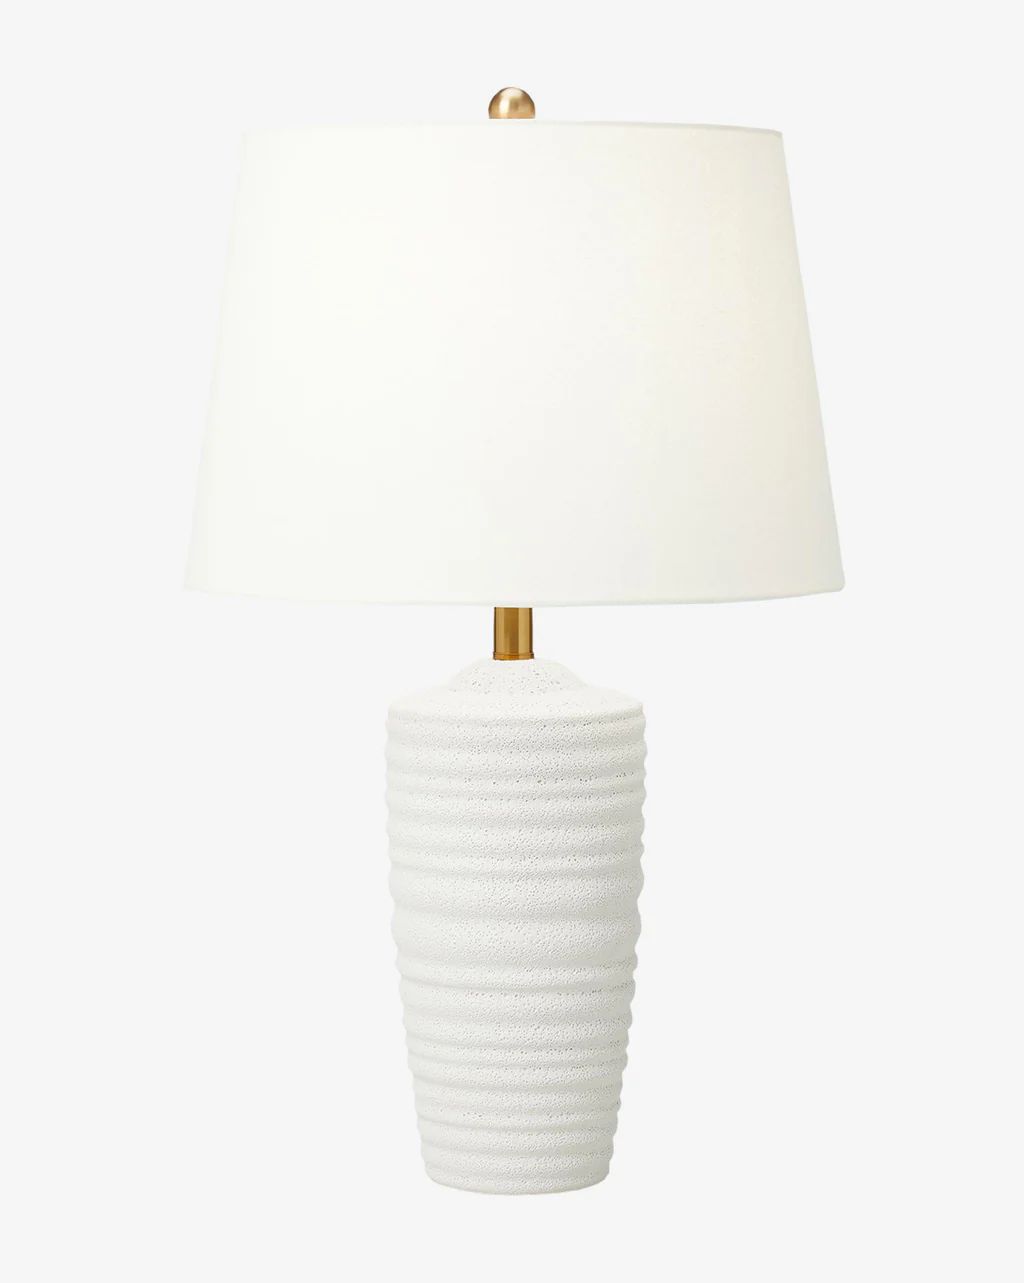 Waveland Table Lamp | McGee & Co.